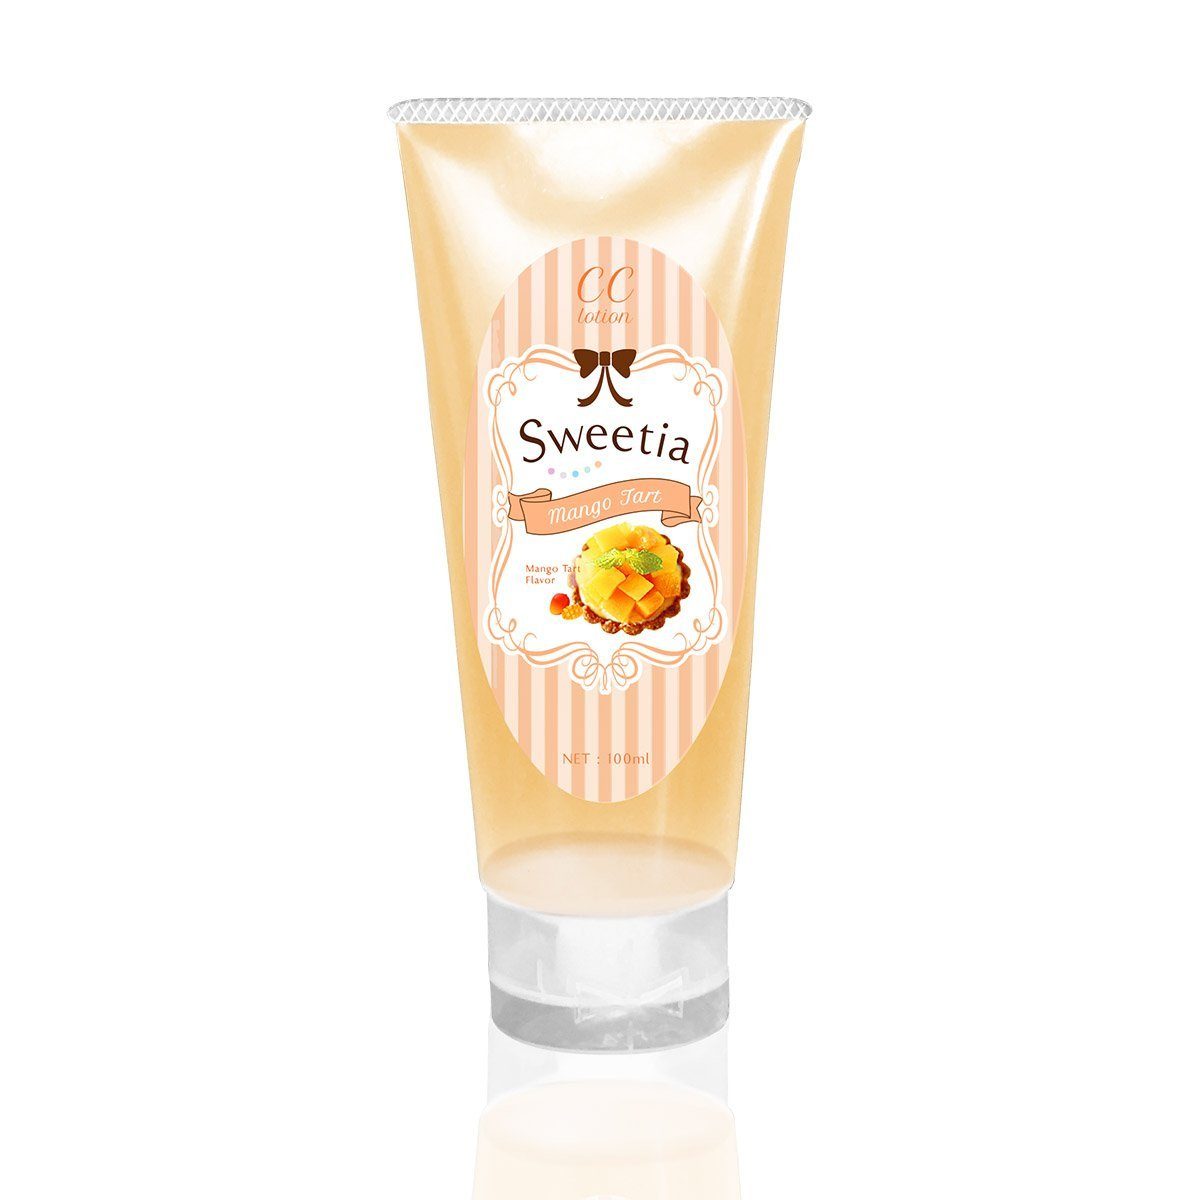 SSI JAPAN CC lotion Sweetia 芒果蛋撻味可食用潤滑液 100 毫升 潤滑液 購買